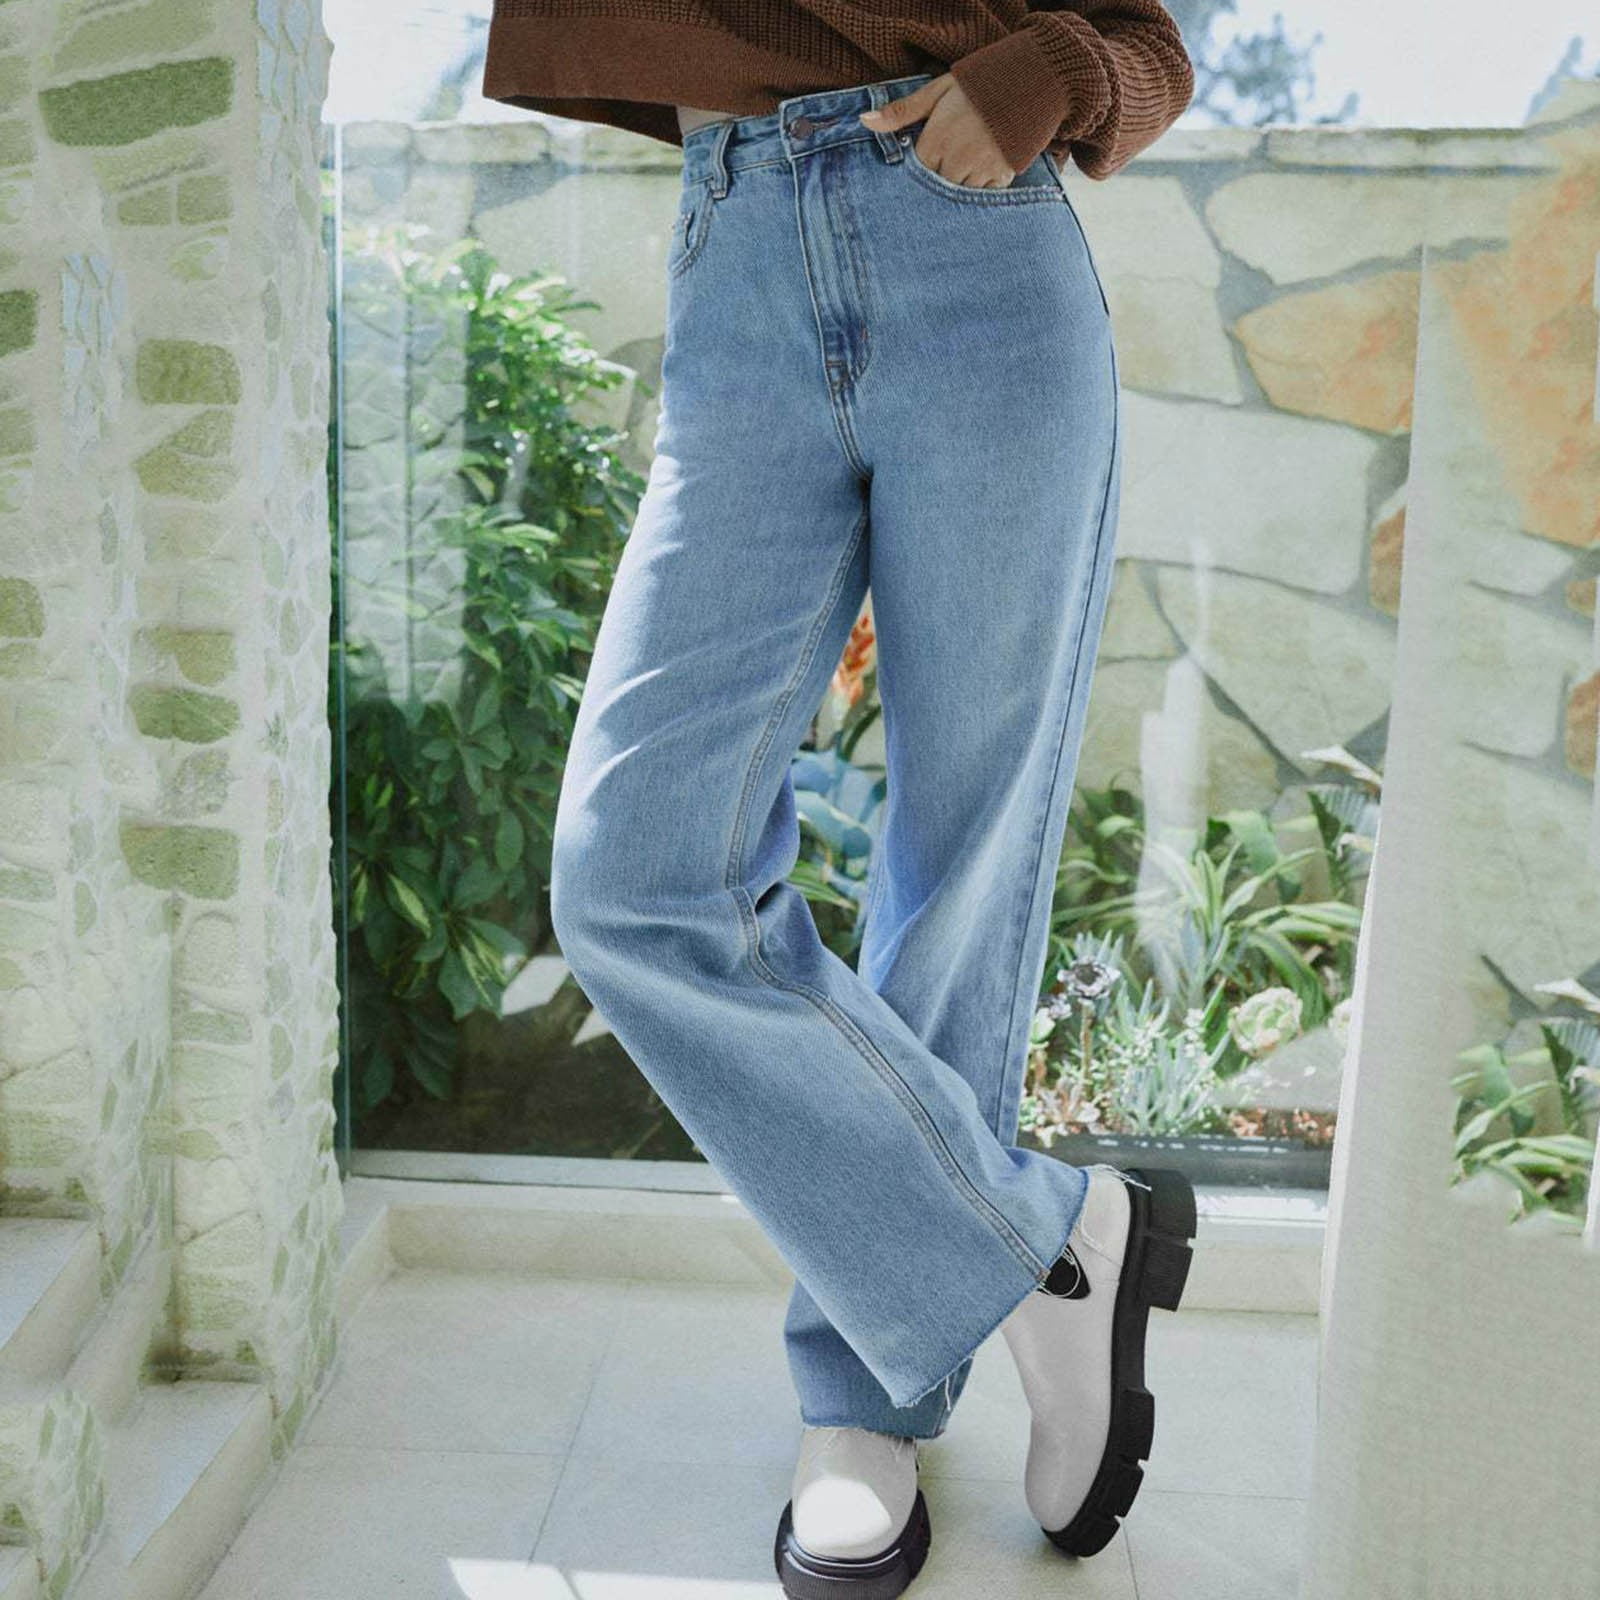 Aayomet Women Jeans Tall Women's Totally Shaping Skinny Jeans,Light Blue M  - Walmart.com